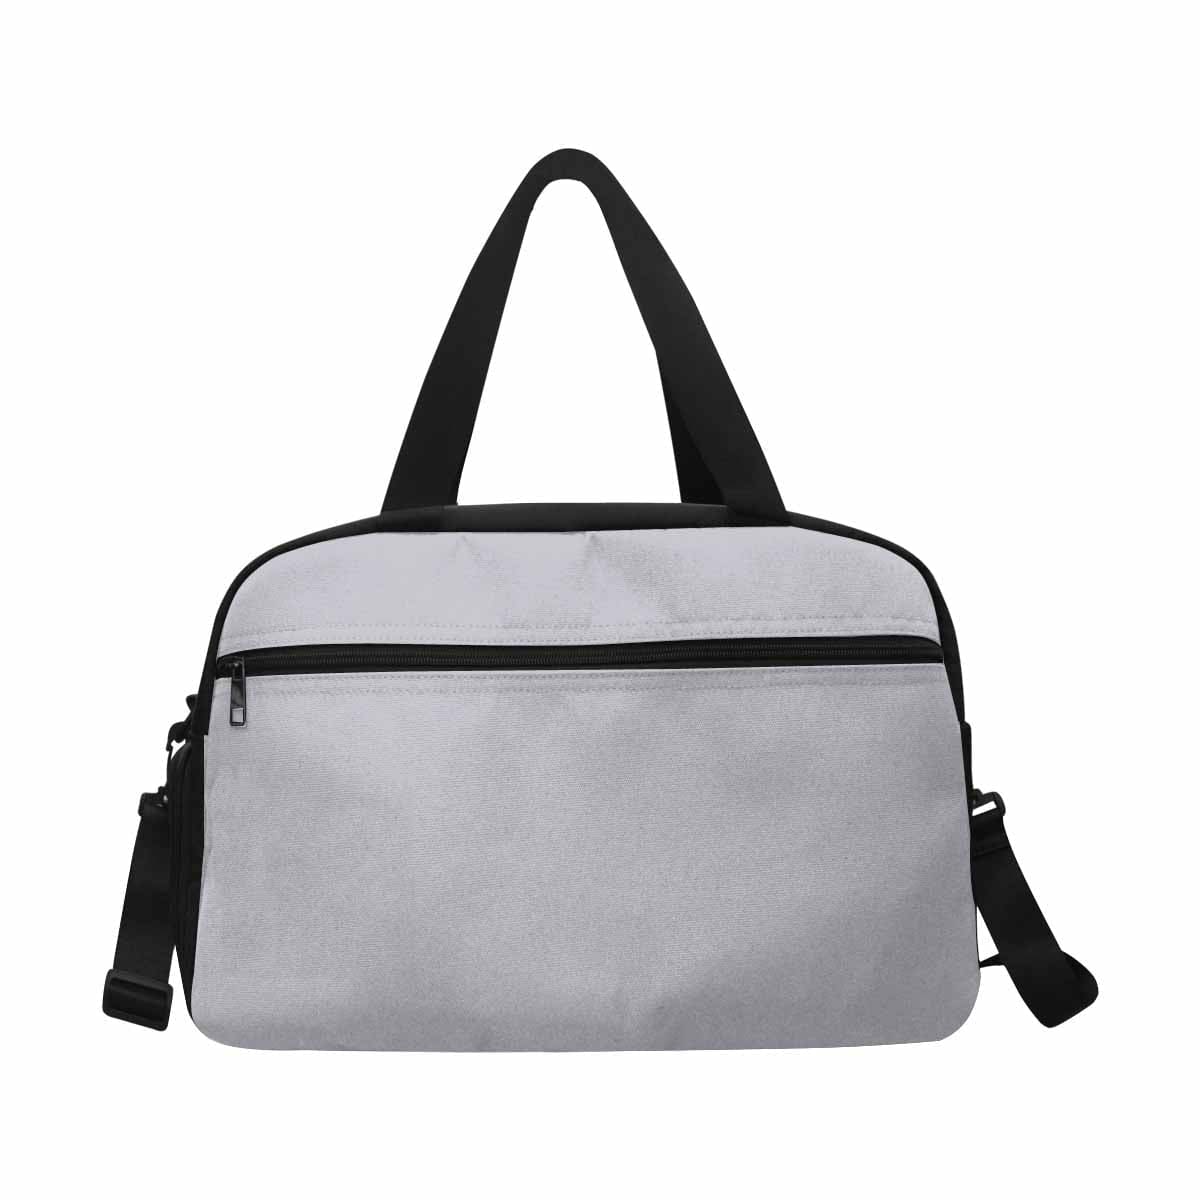 Slate Gray Tote And Crossbody Travel Bag - Bags | Travel Bags | Crossbody